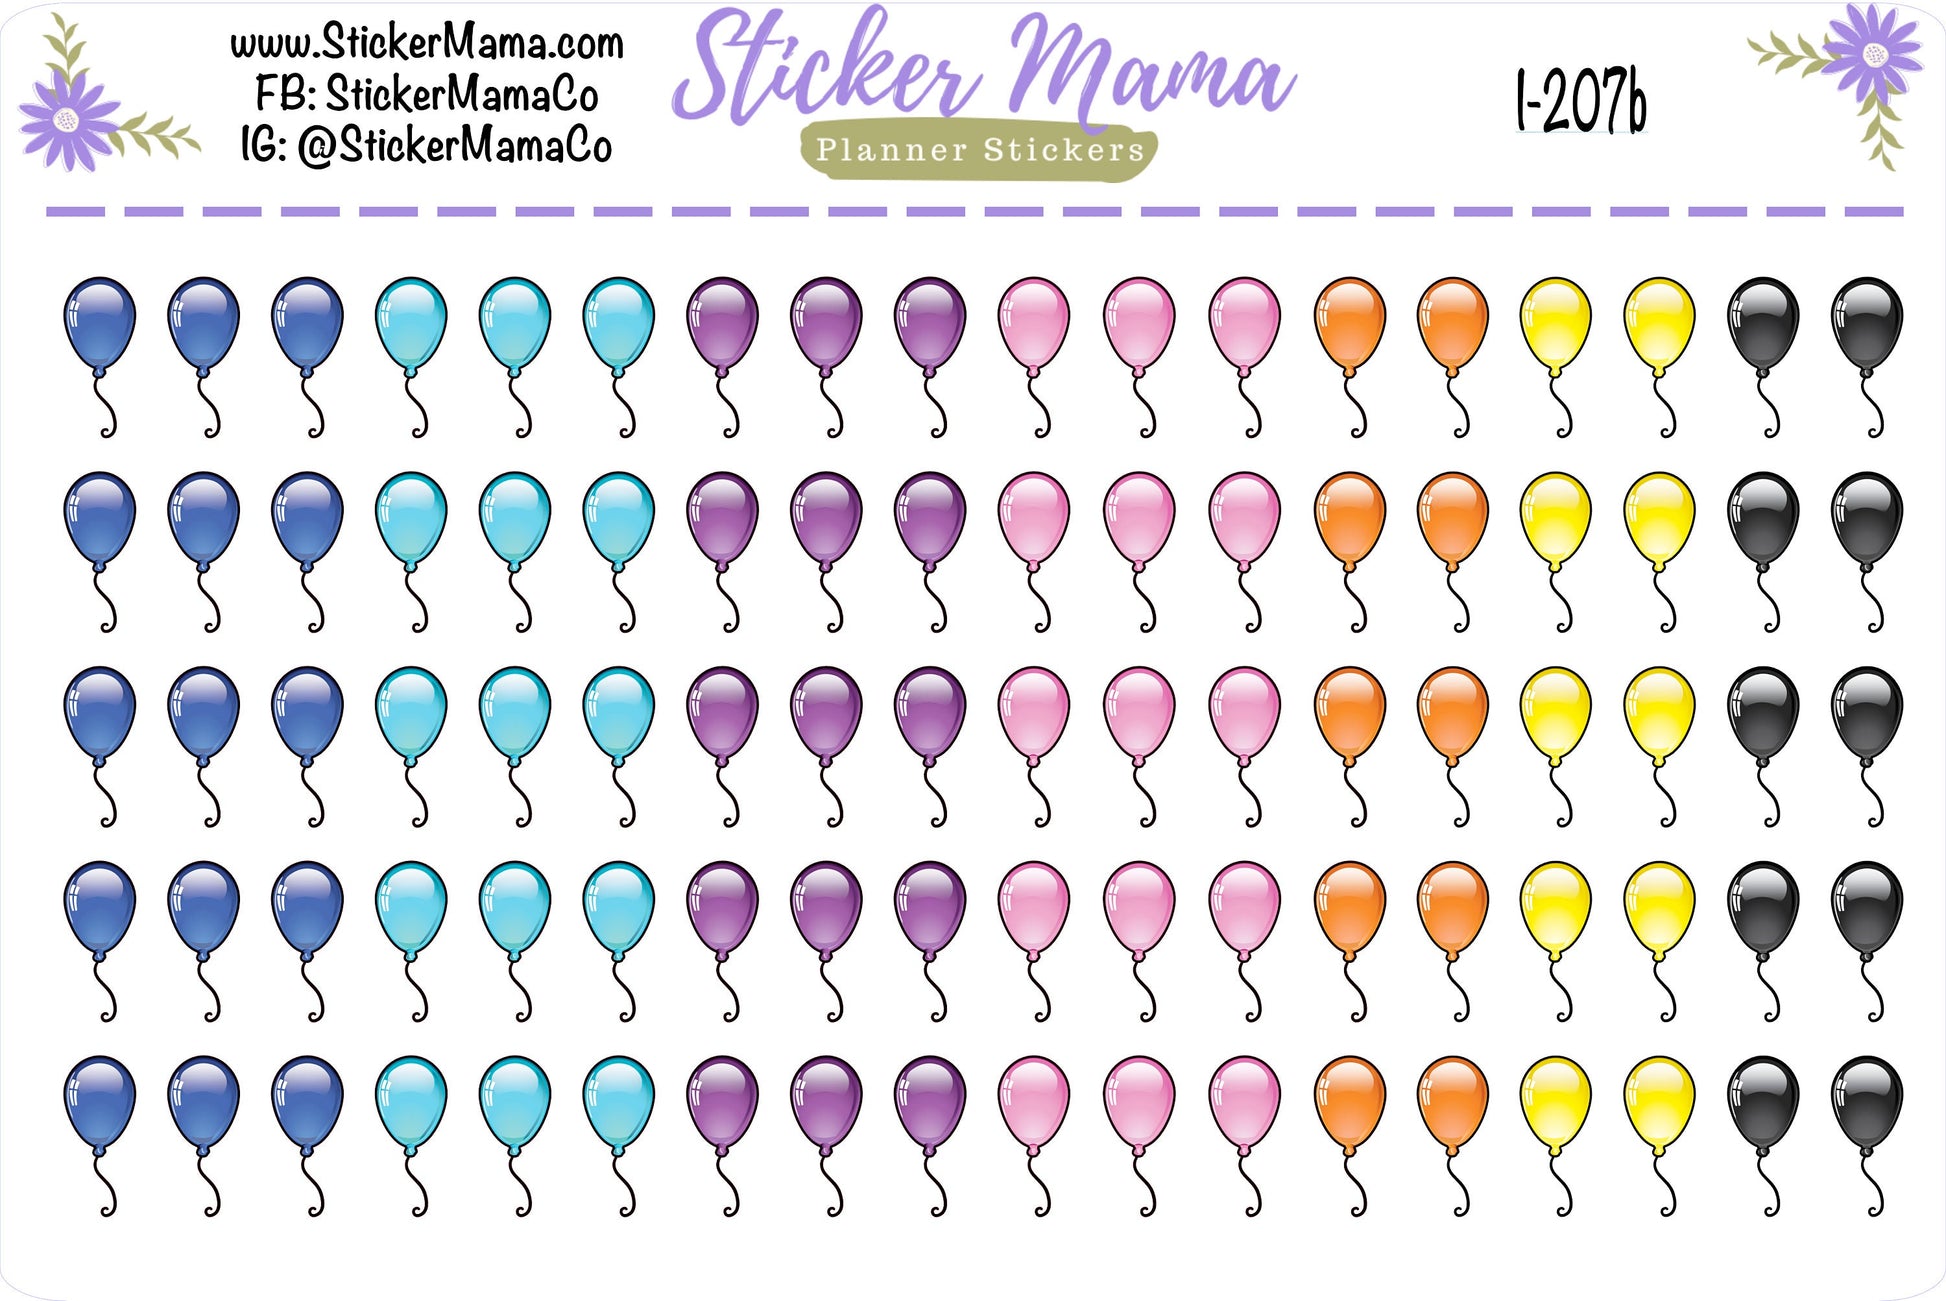 BALLOON PLANNER Stickers I-207, Balloon Stickers